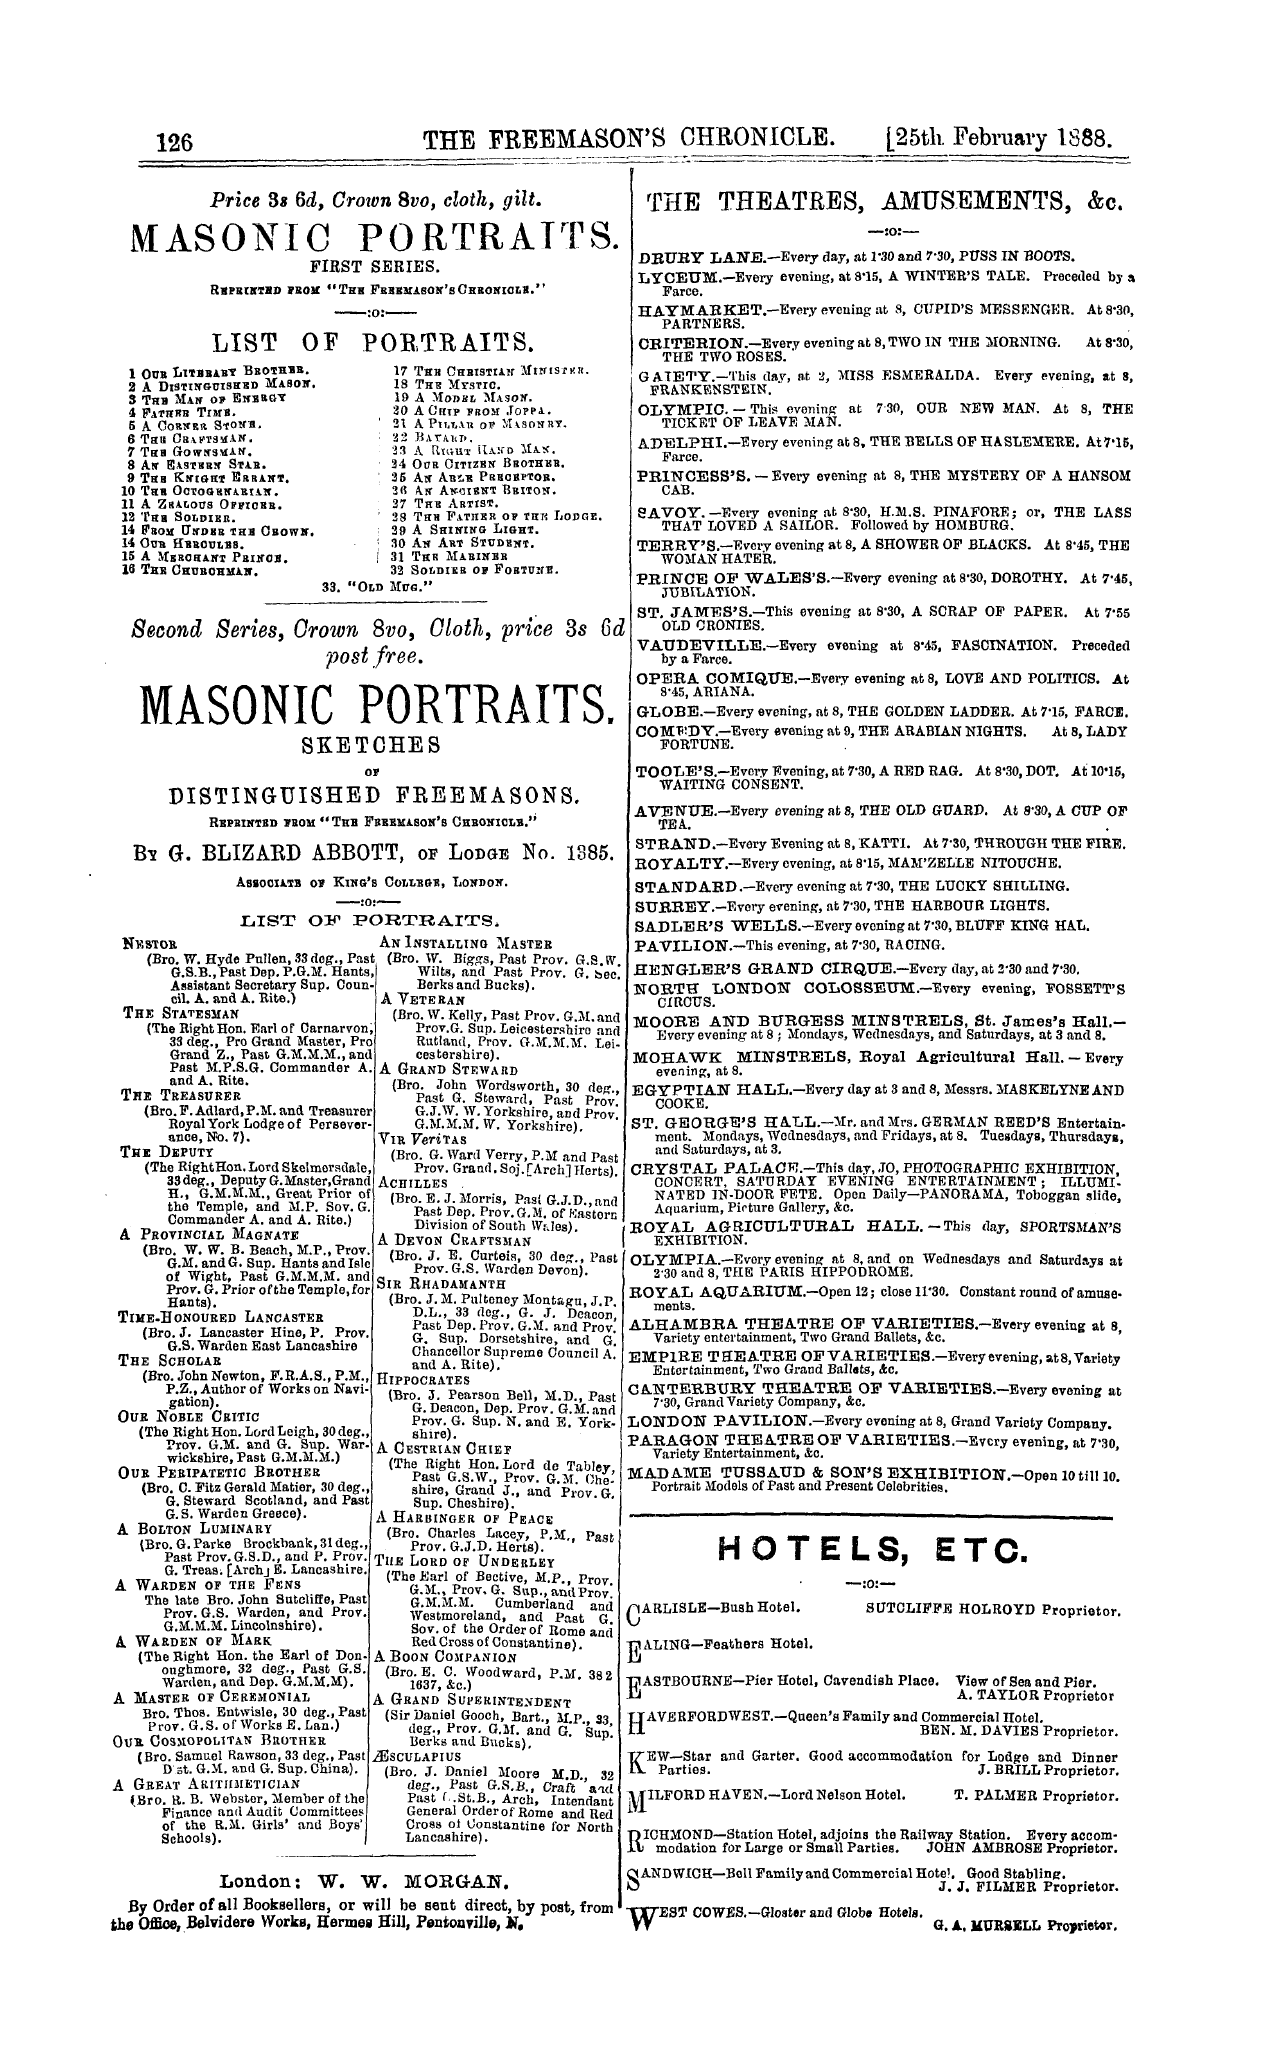 The Freemason's Chronicle: 1888-02-25 - The Theatres, Amusements, &C.